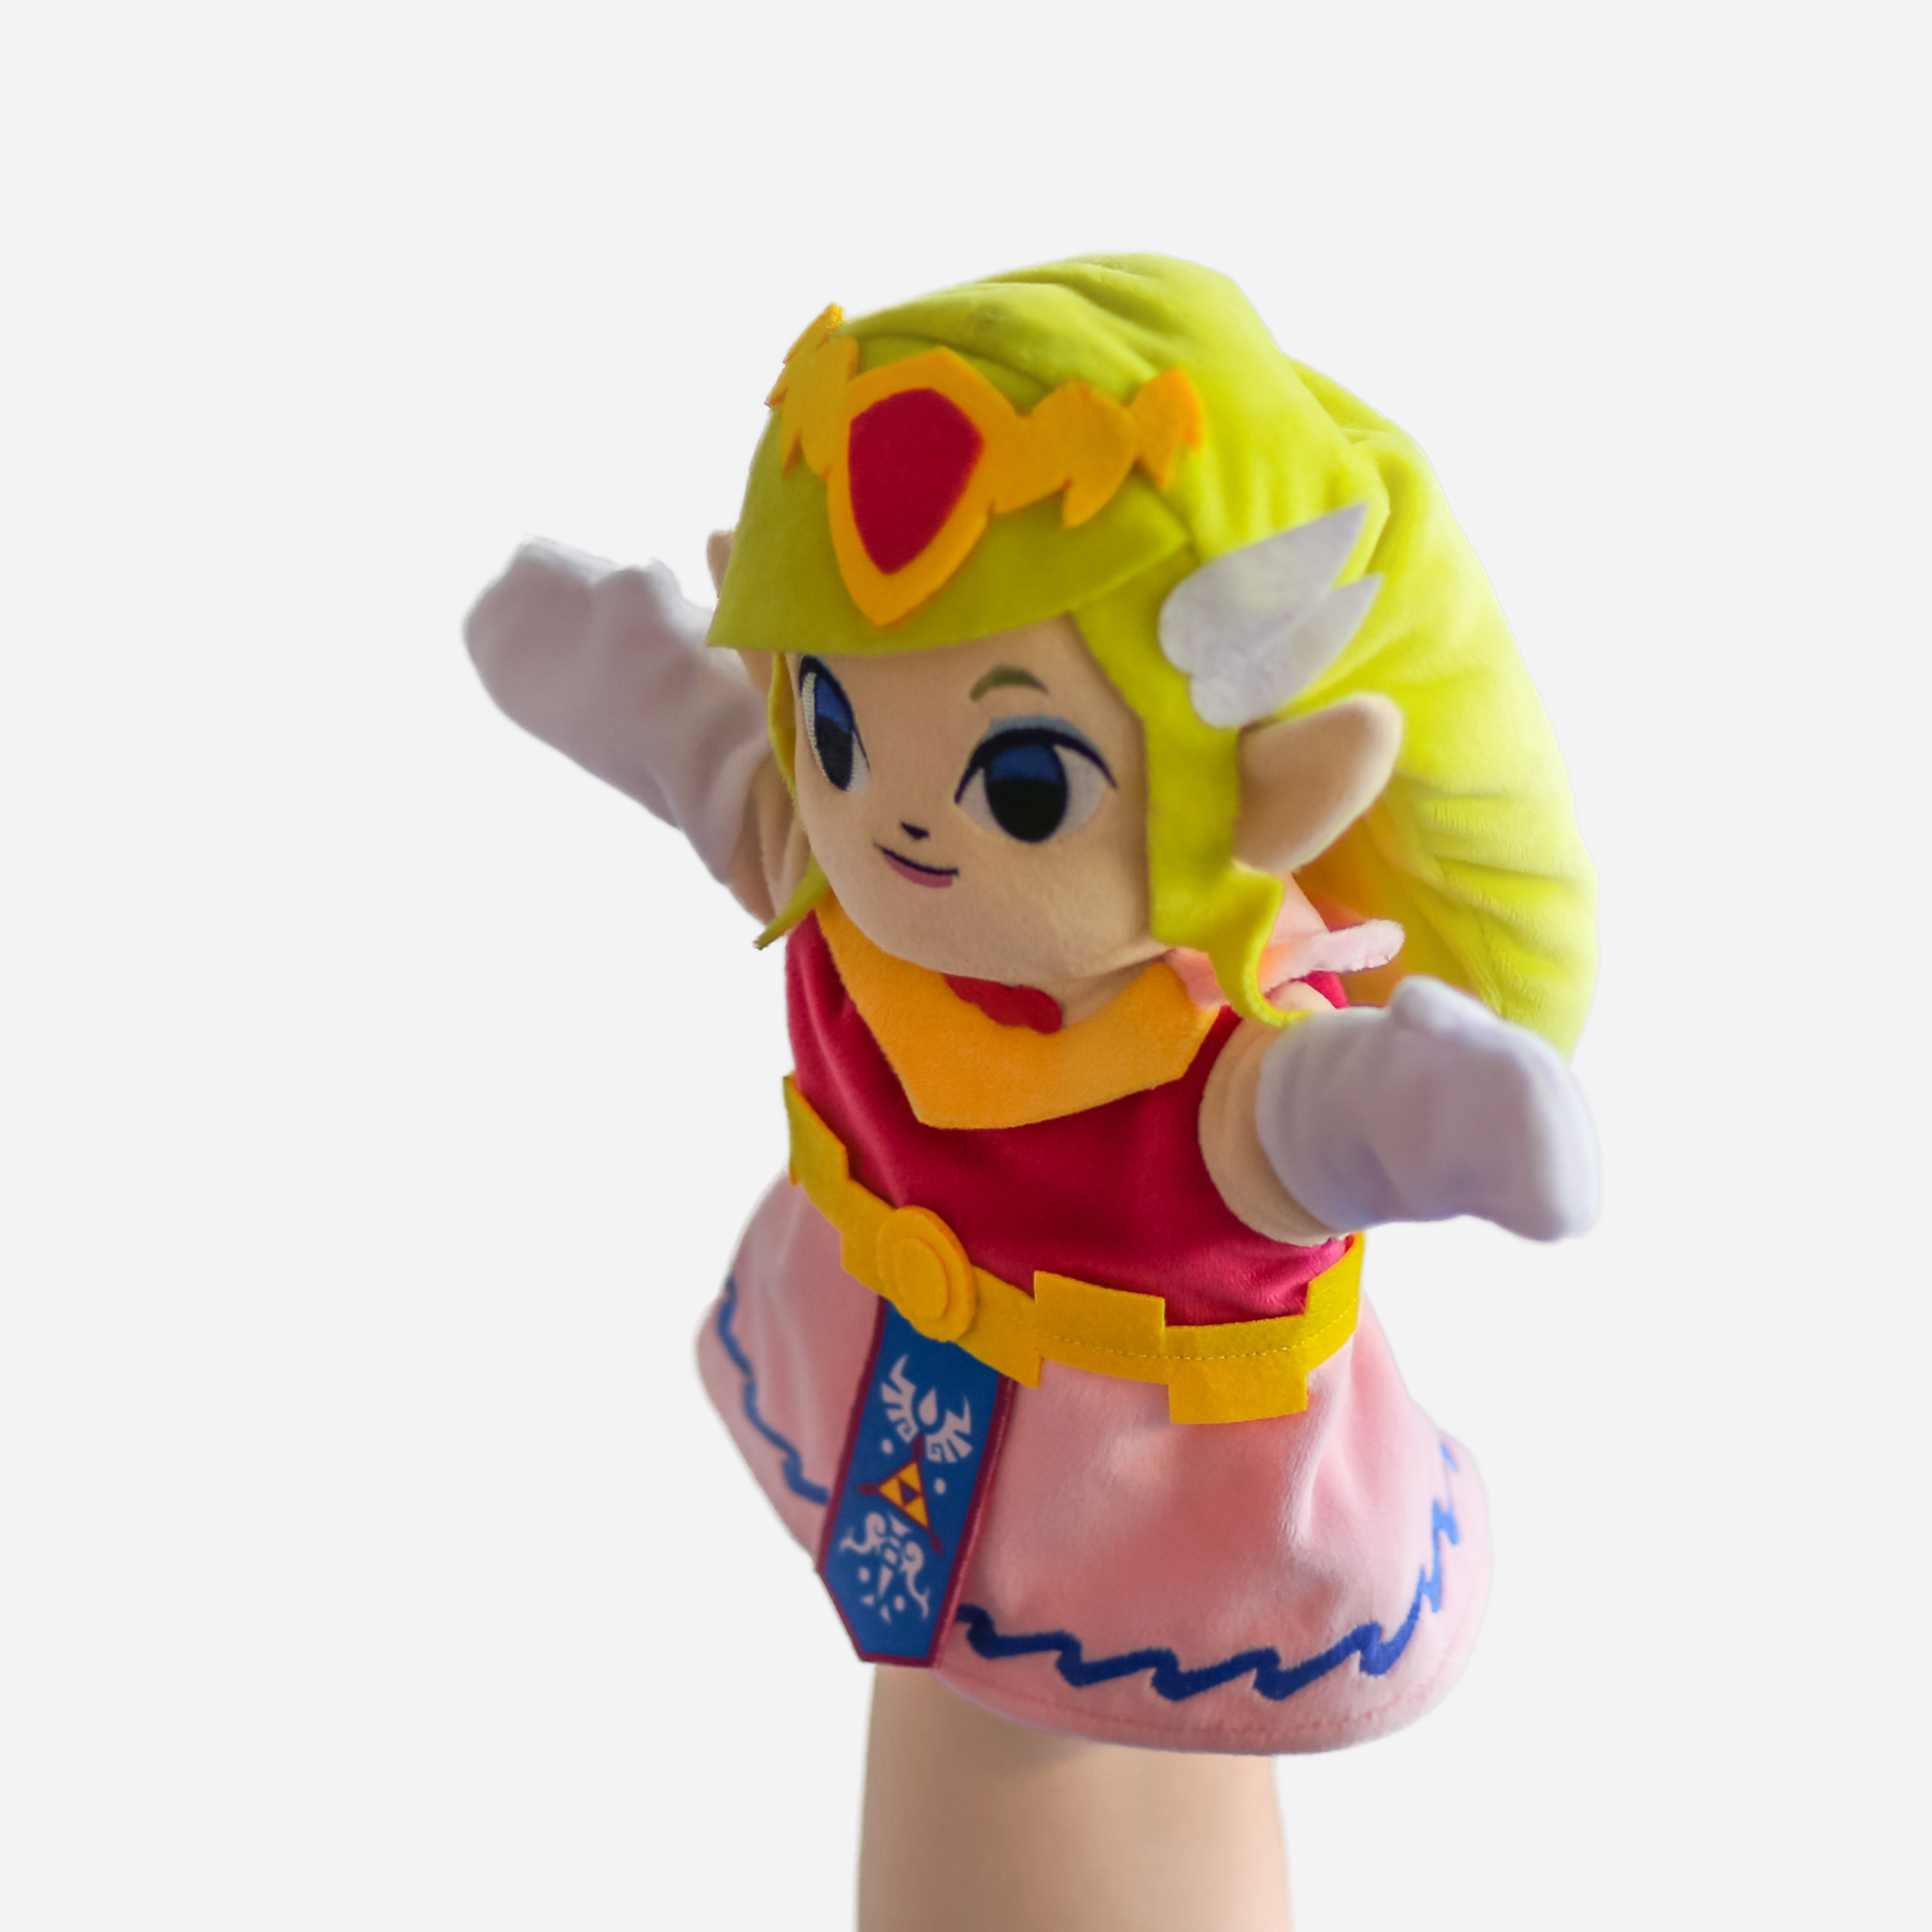 Princess Zelda puppet by Uncute